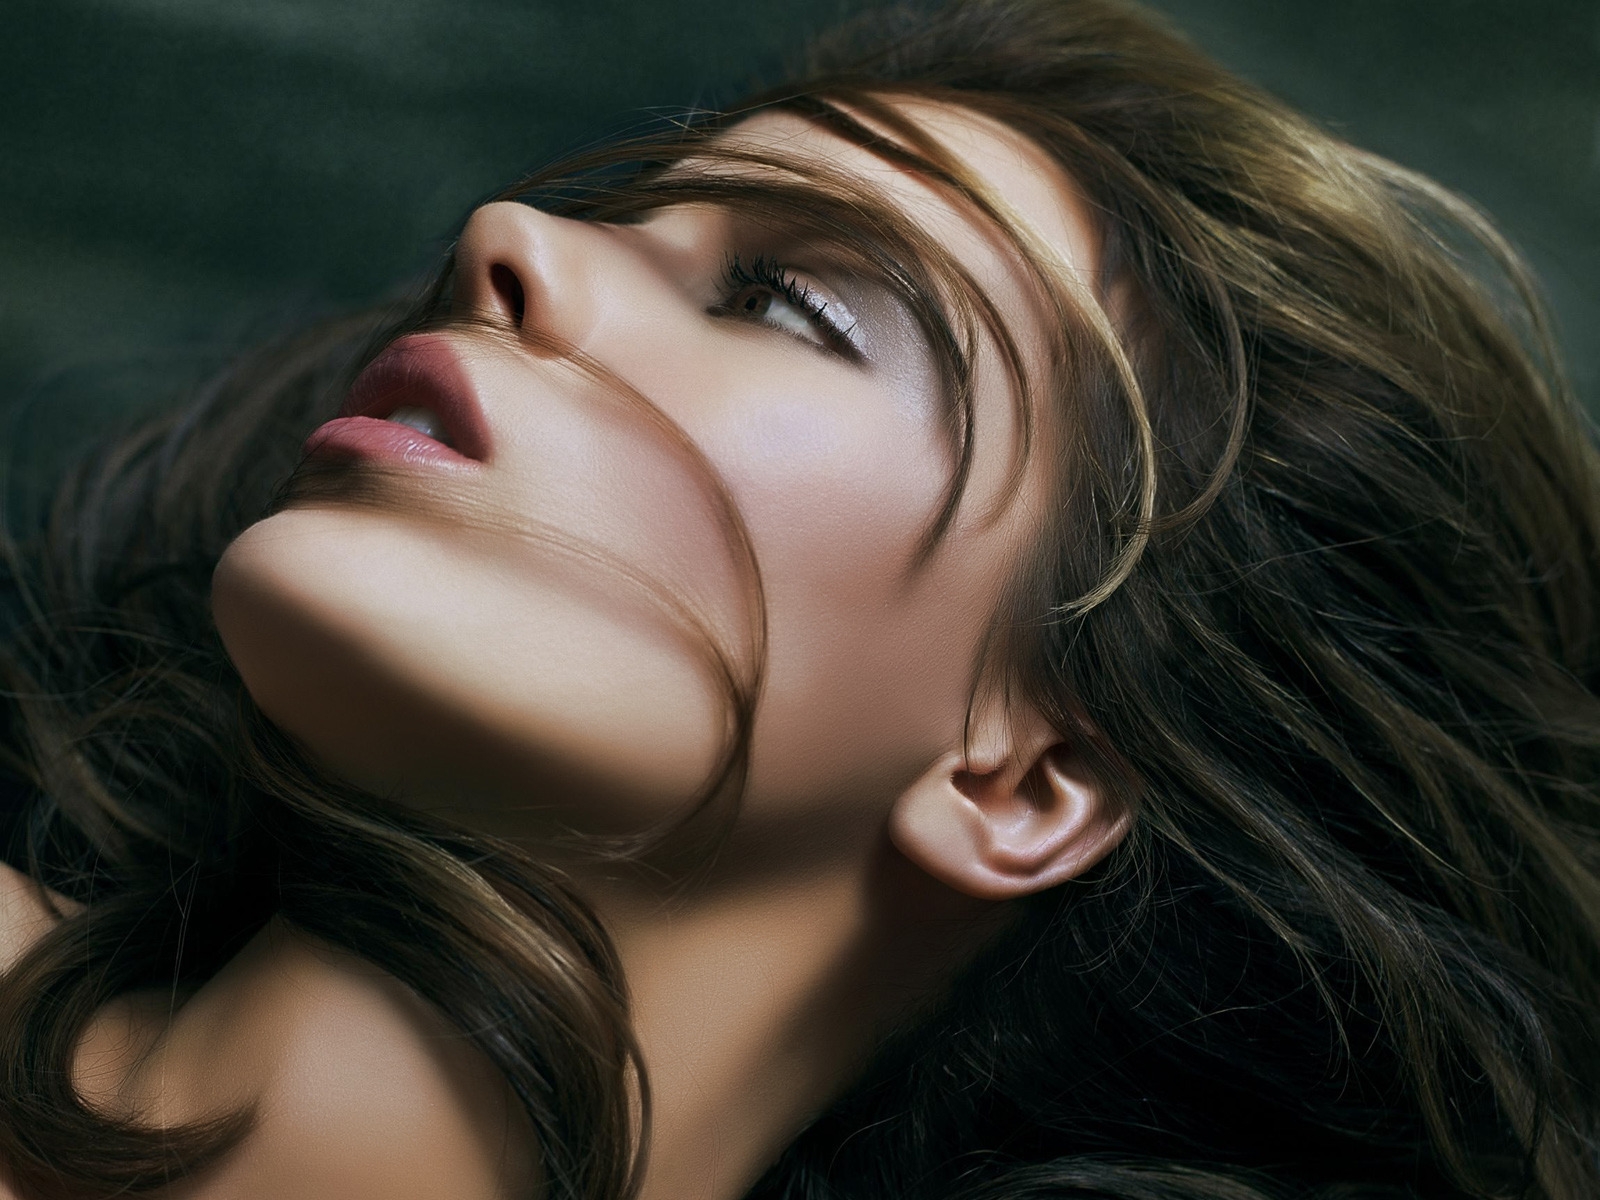 Kate Beckinsale Glamorous for 1600 x 1200 resolution